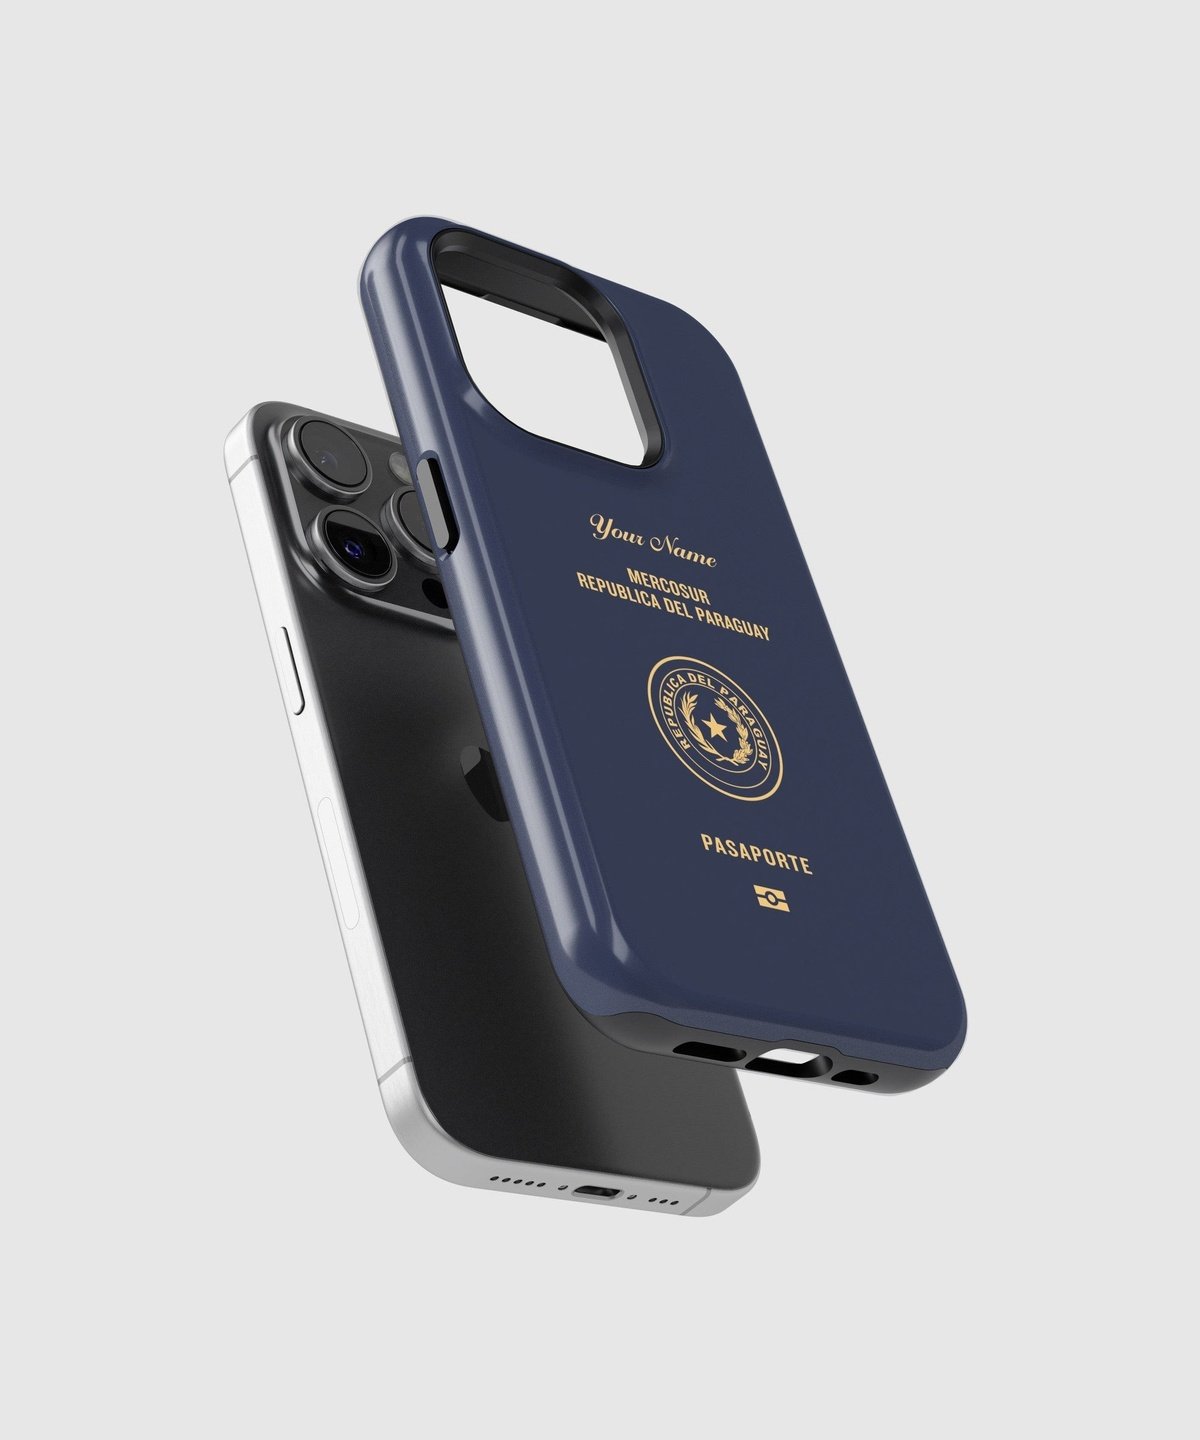 Paraguay Passport - iPhone Case